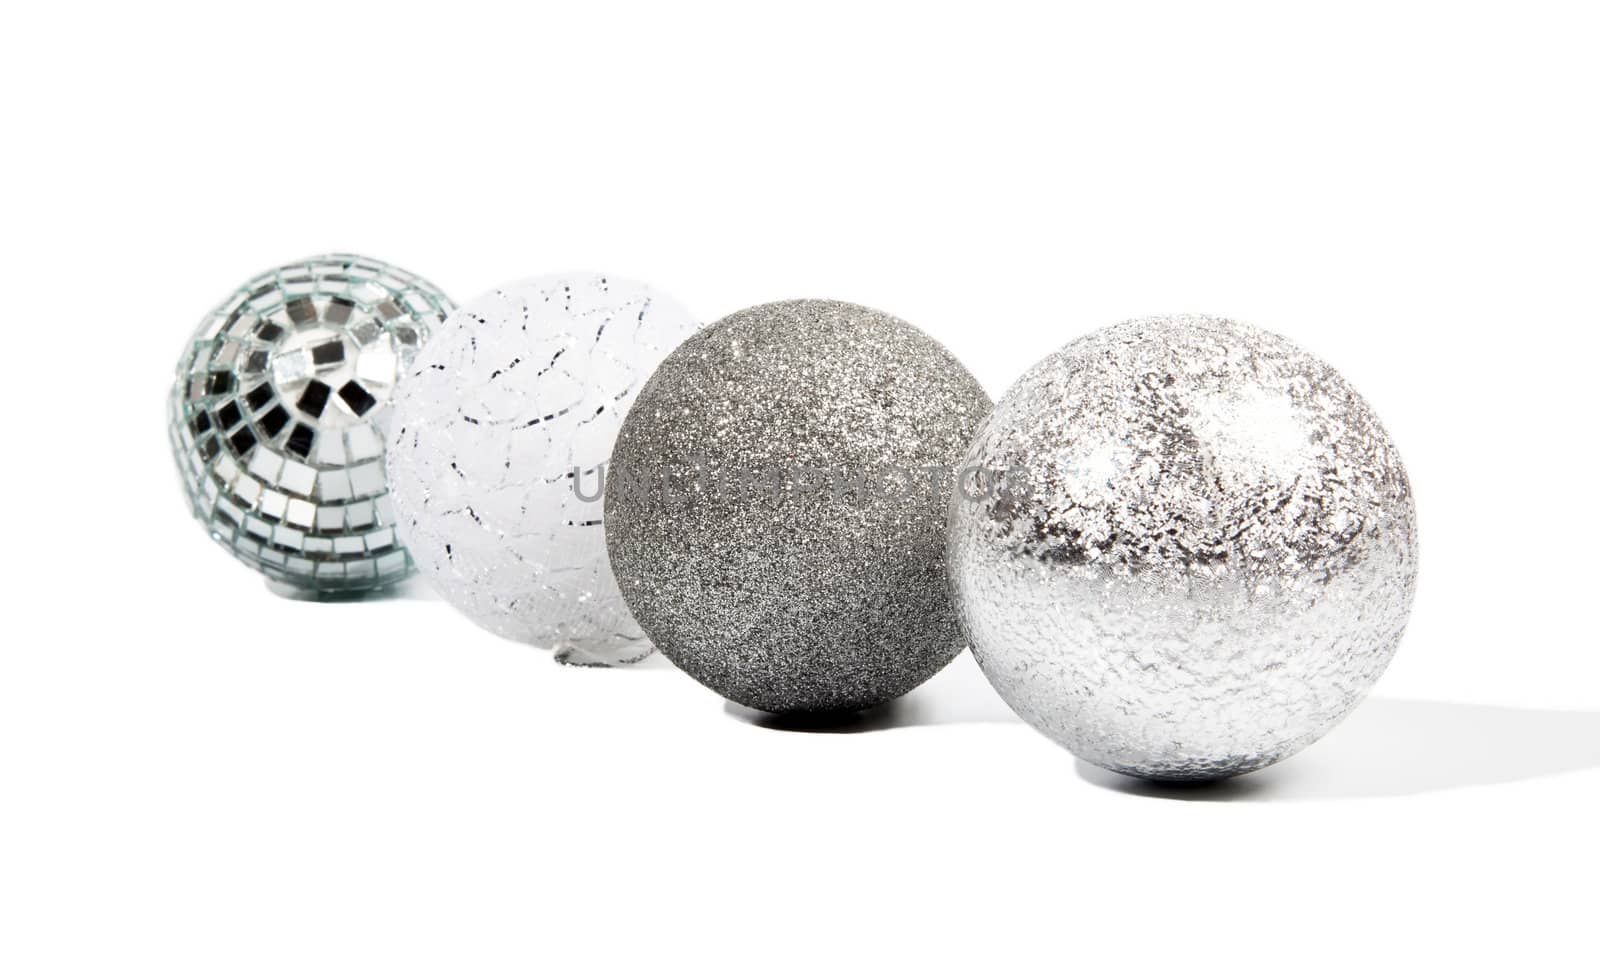 Four Christmas silver balls on white background